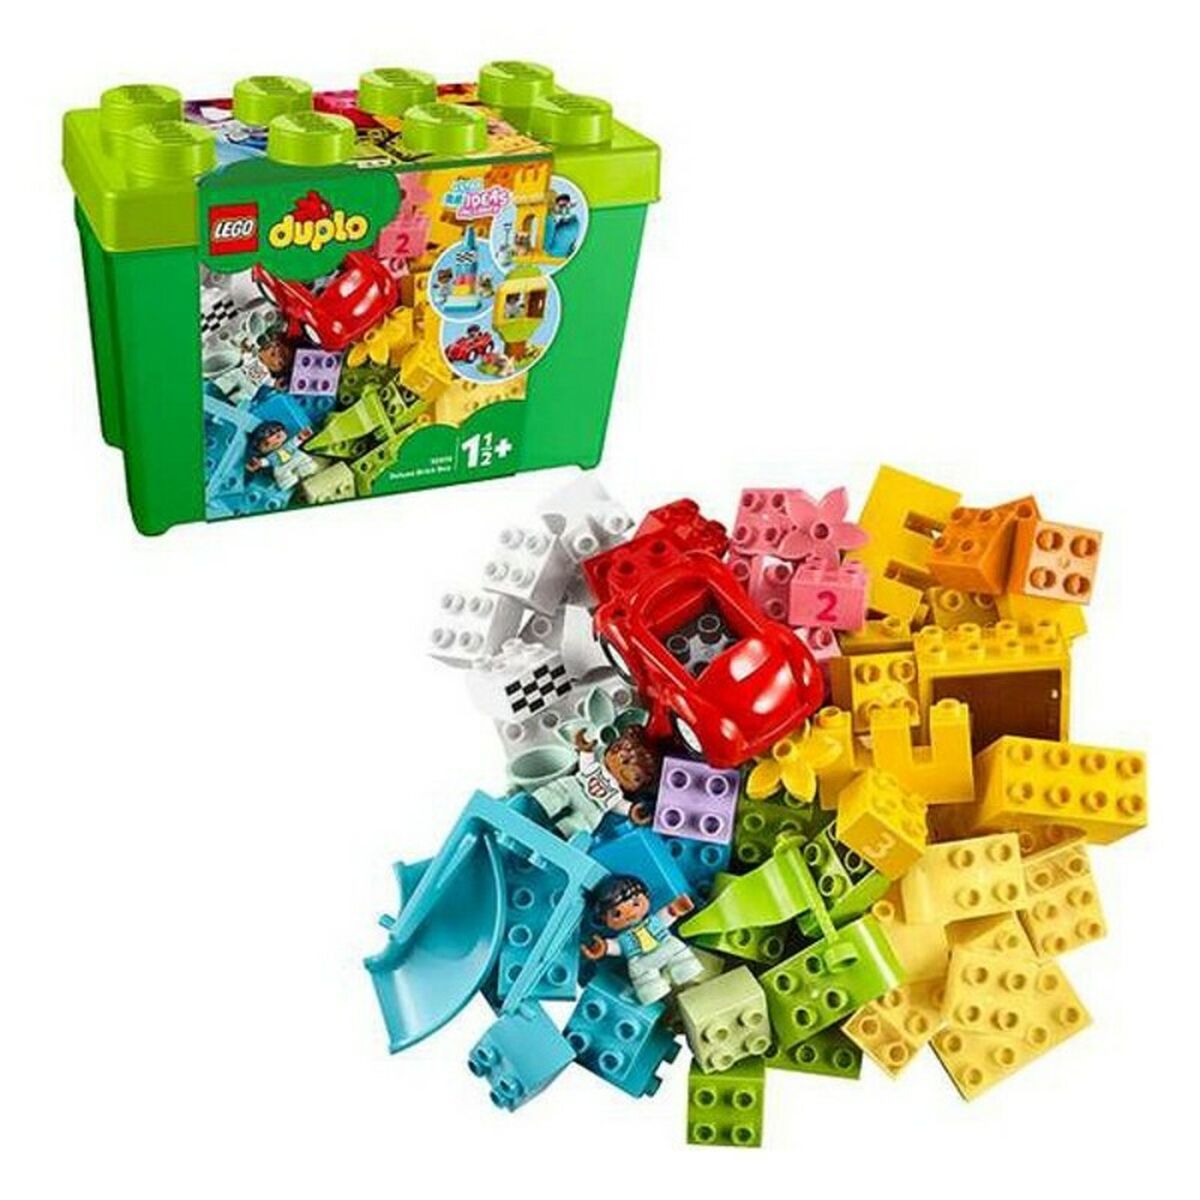 Lego Duplo Deluxe Brick Box Lego 10914 (85 pcs)